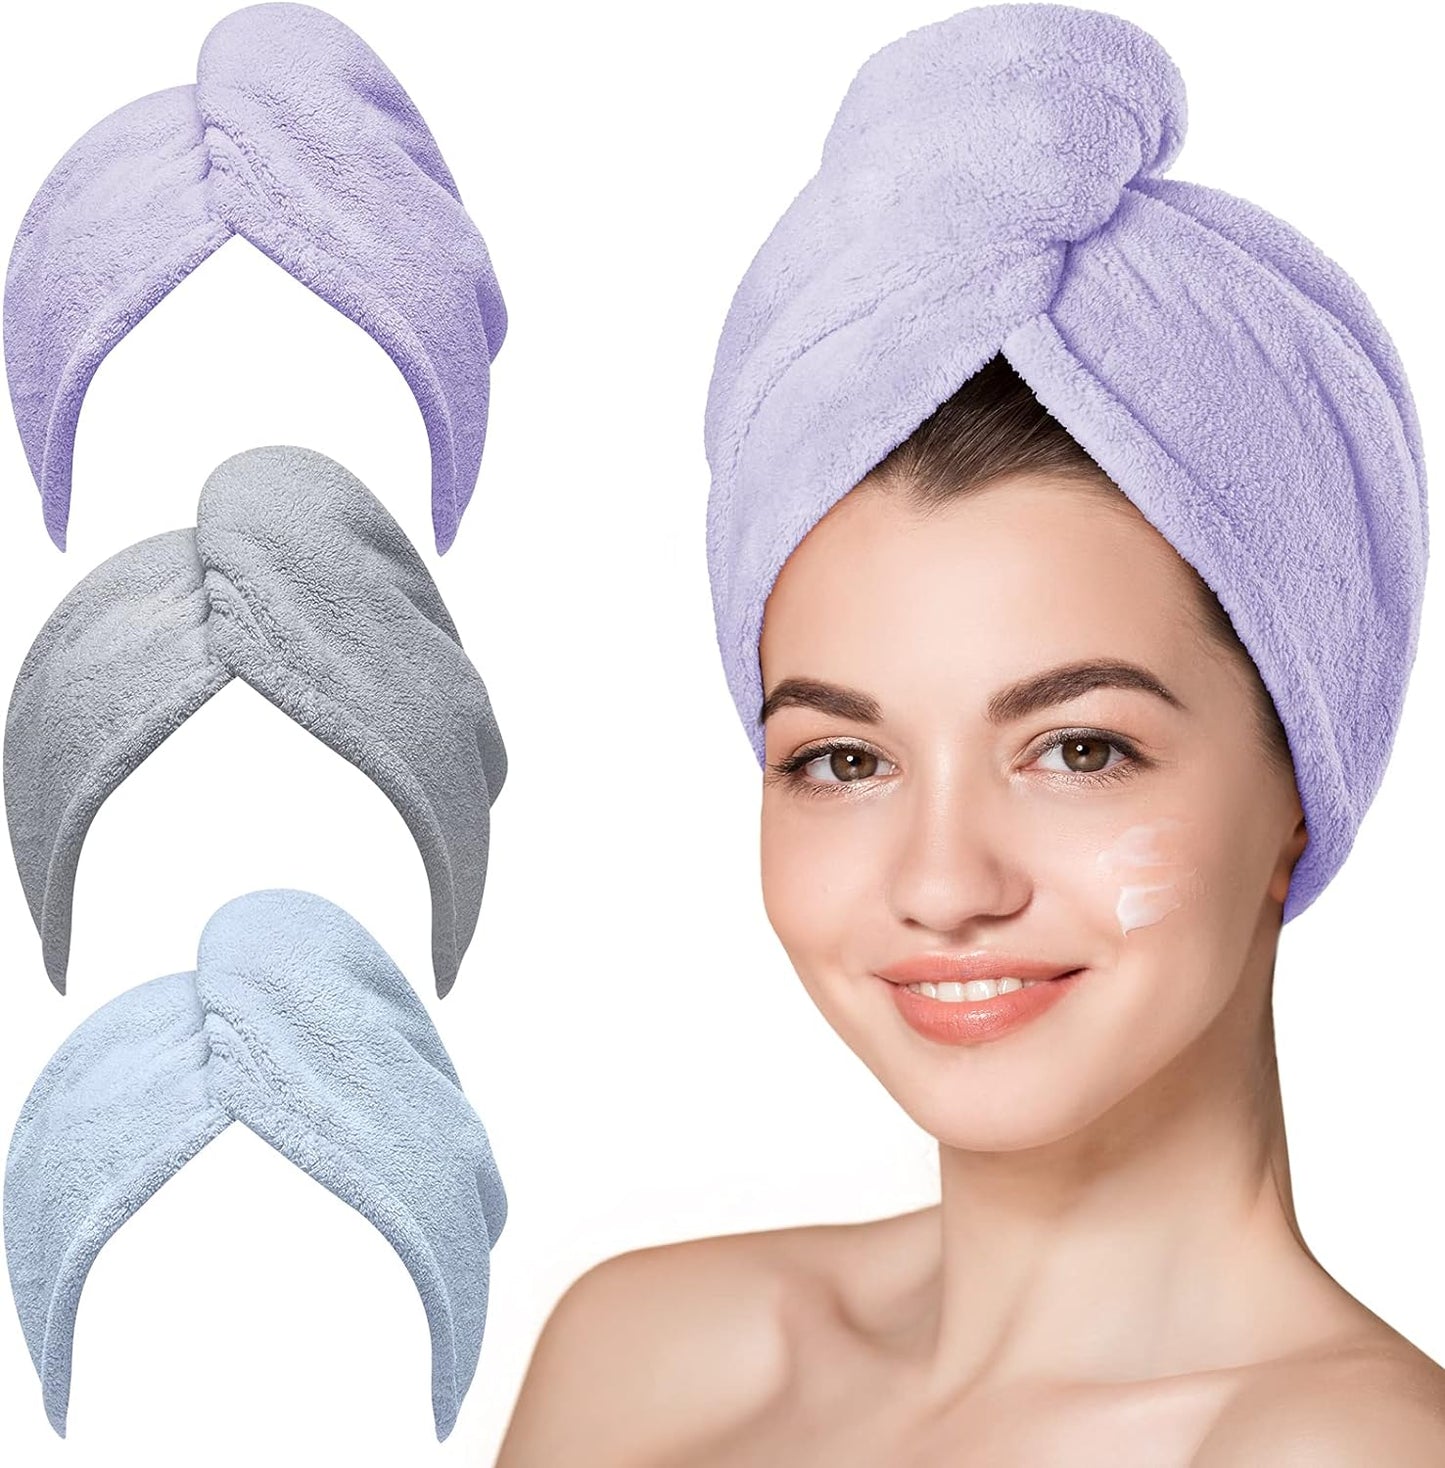 Microfiber Hair Towel, 3 Packs Hair Turbans for Wet Hair, Drying Hair Wrap Towels for Curly Hair Women anti Frizz (Blue,Grey,Pink)